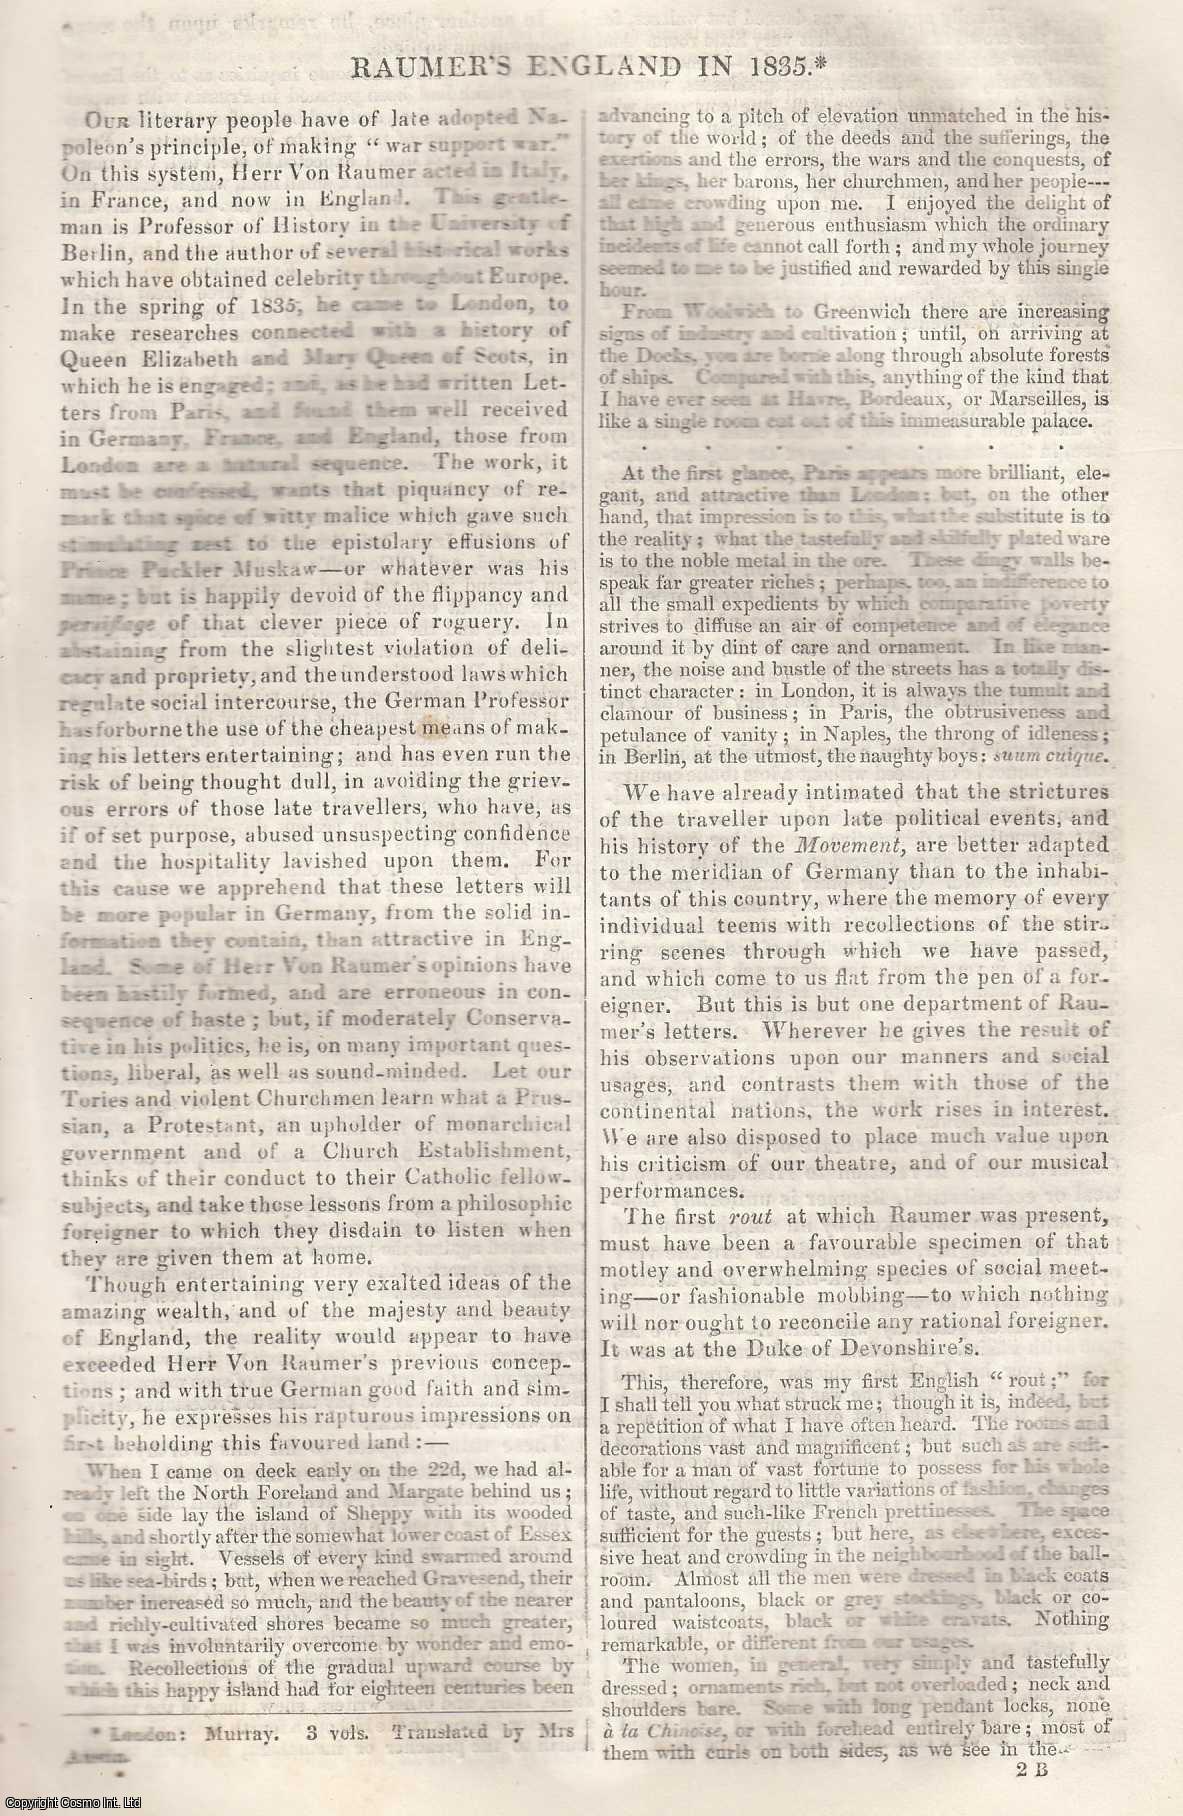 Johnstone, Christian - Raumer's England in 1835. An original article from Tait's Edinburgh Magazine, 1836.